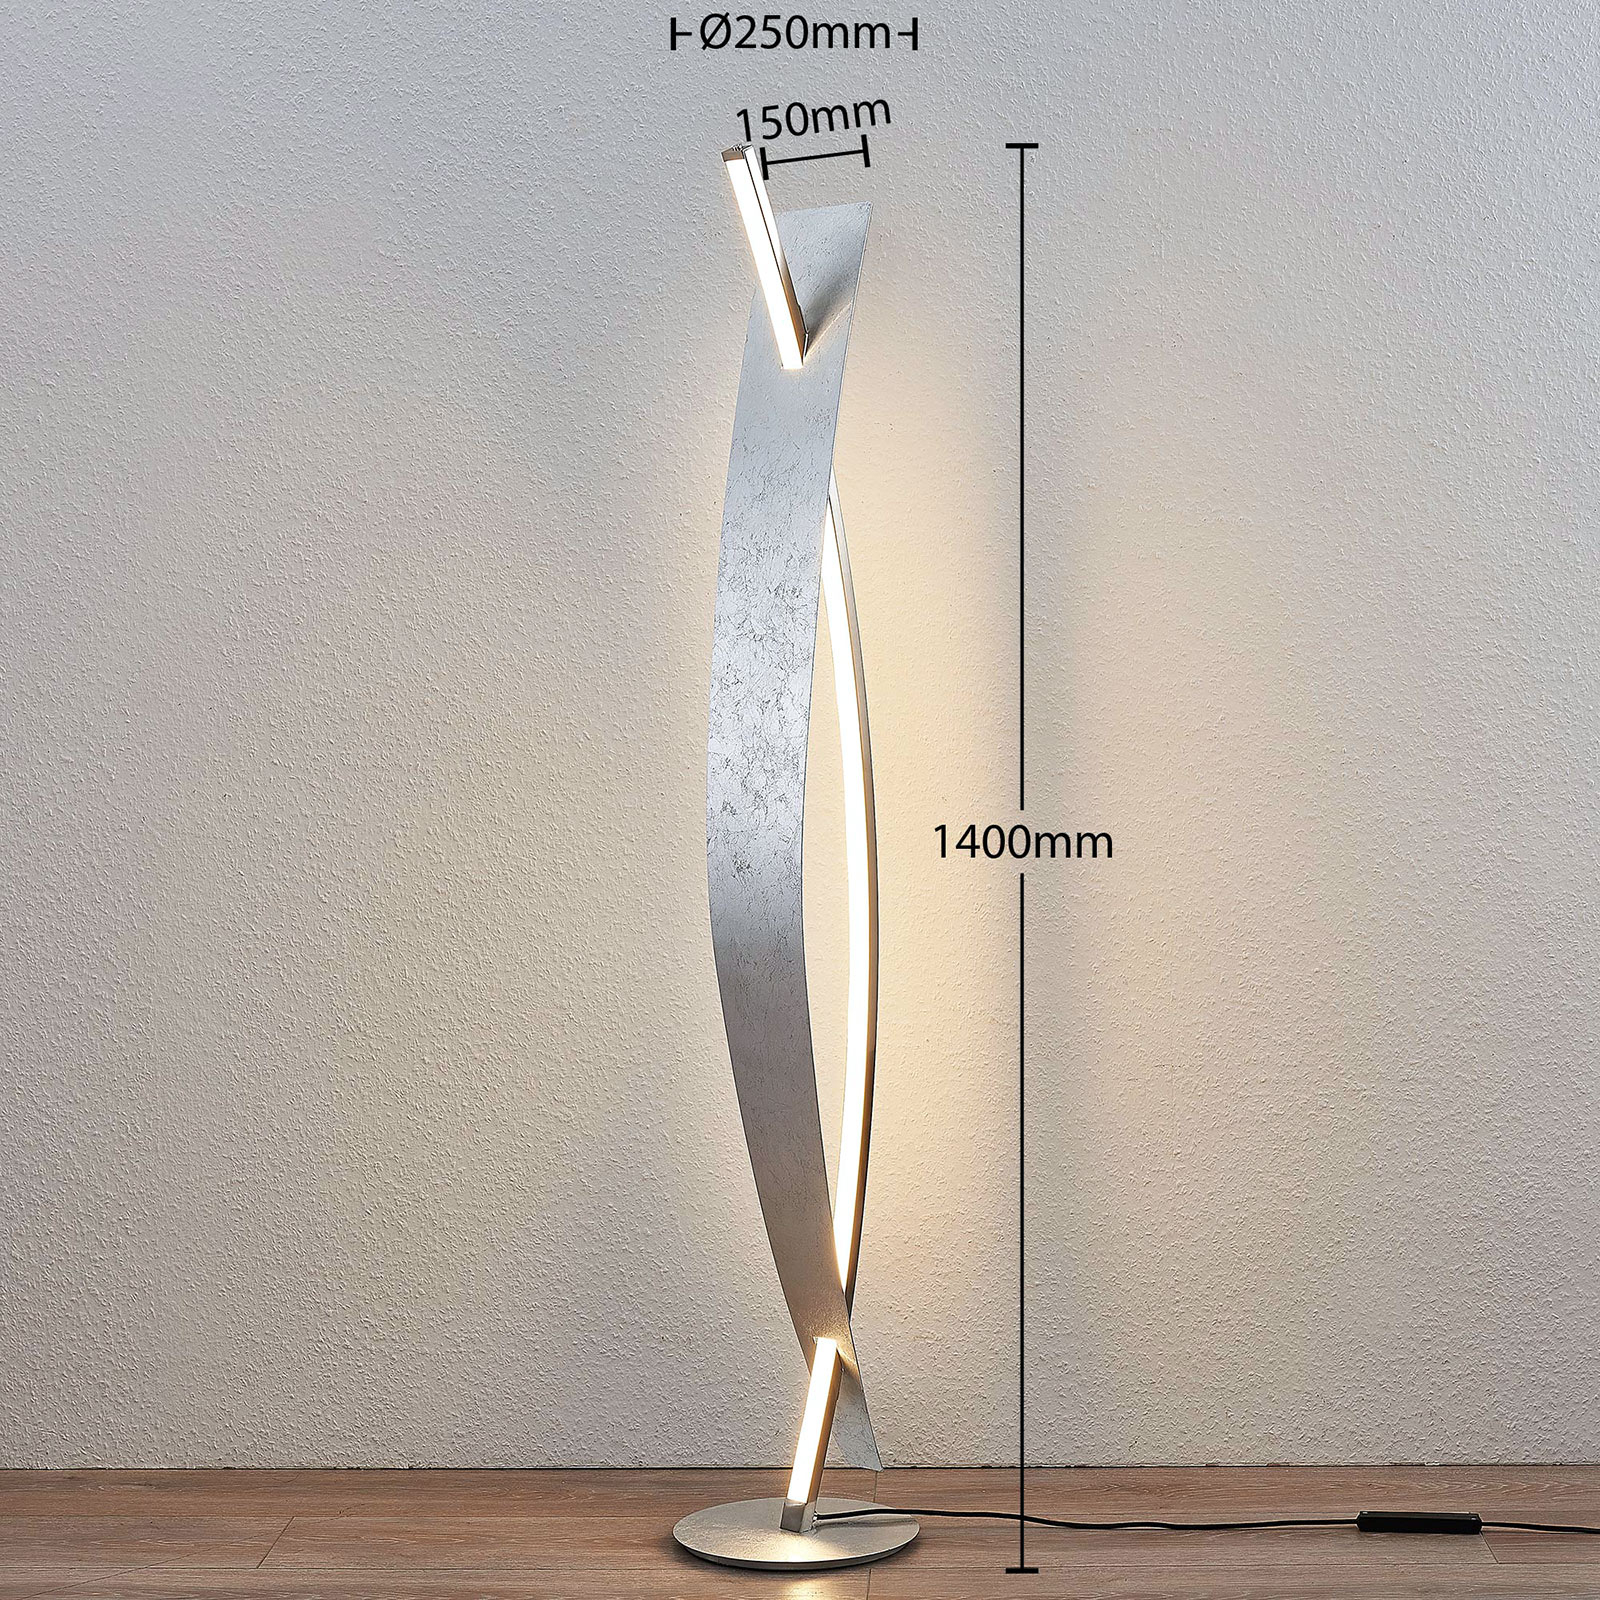 Lampa stojąca LED Marija, szlachetne srebro